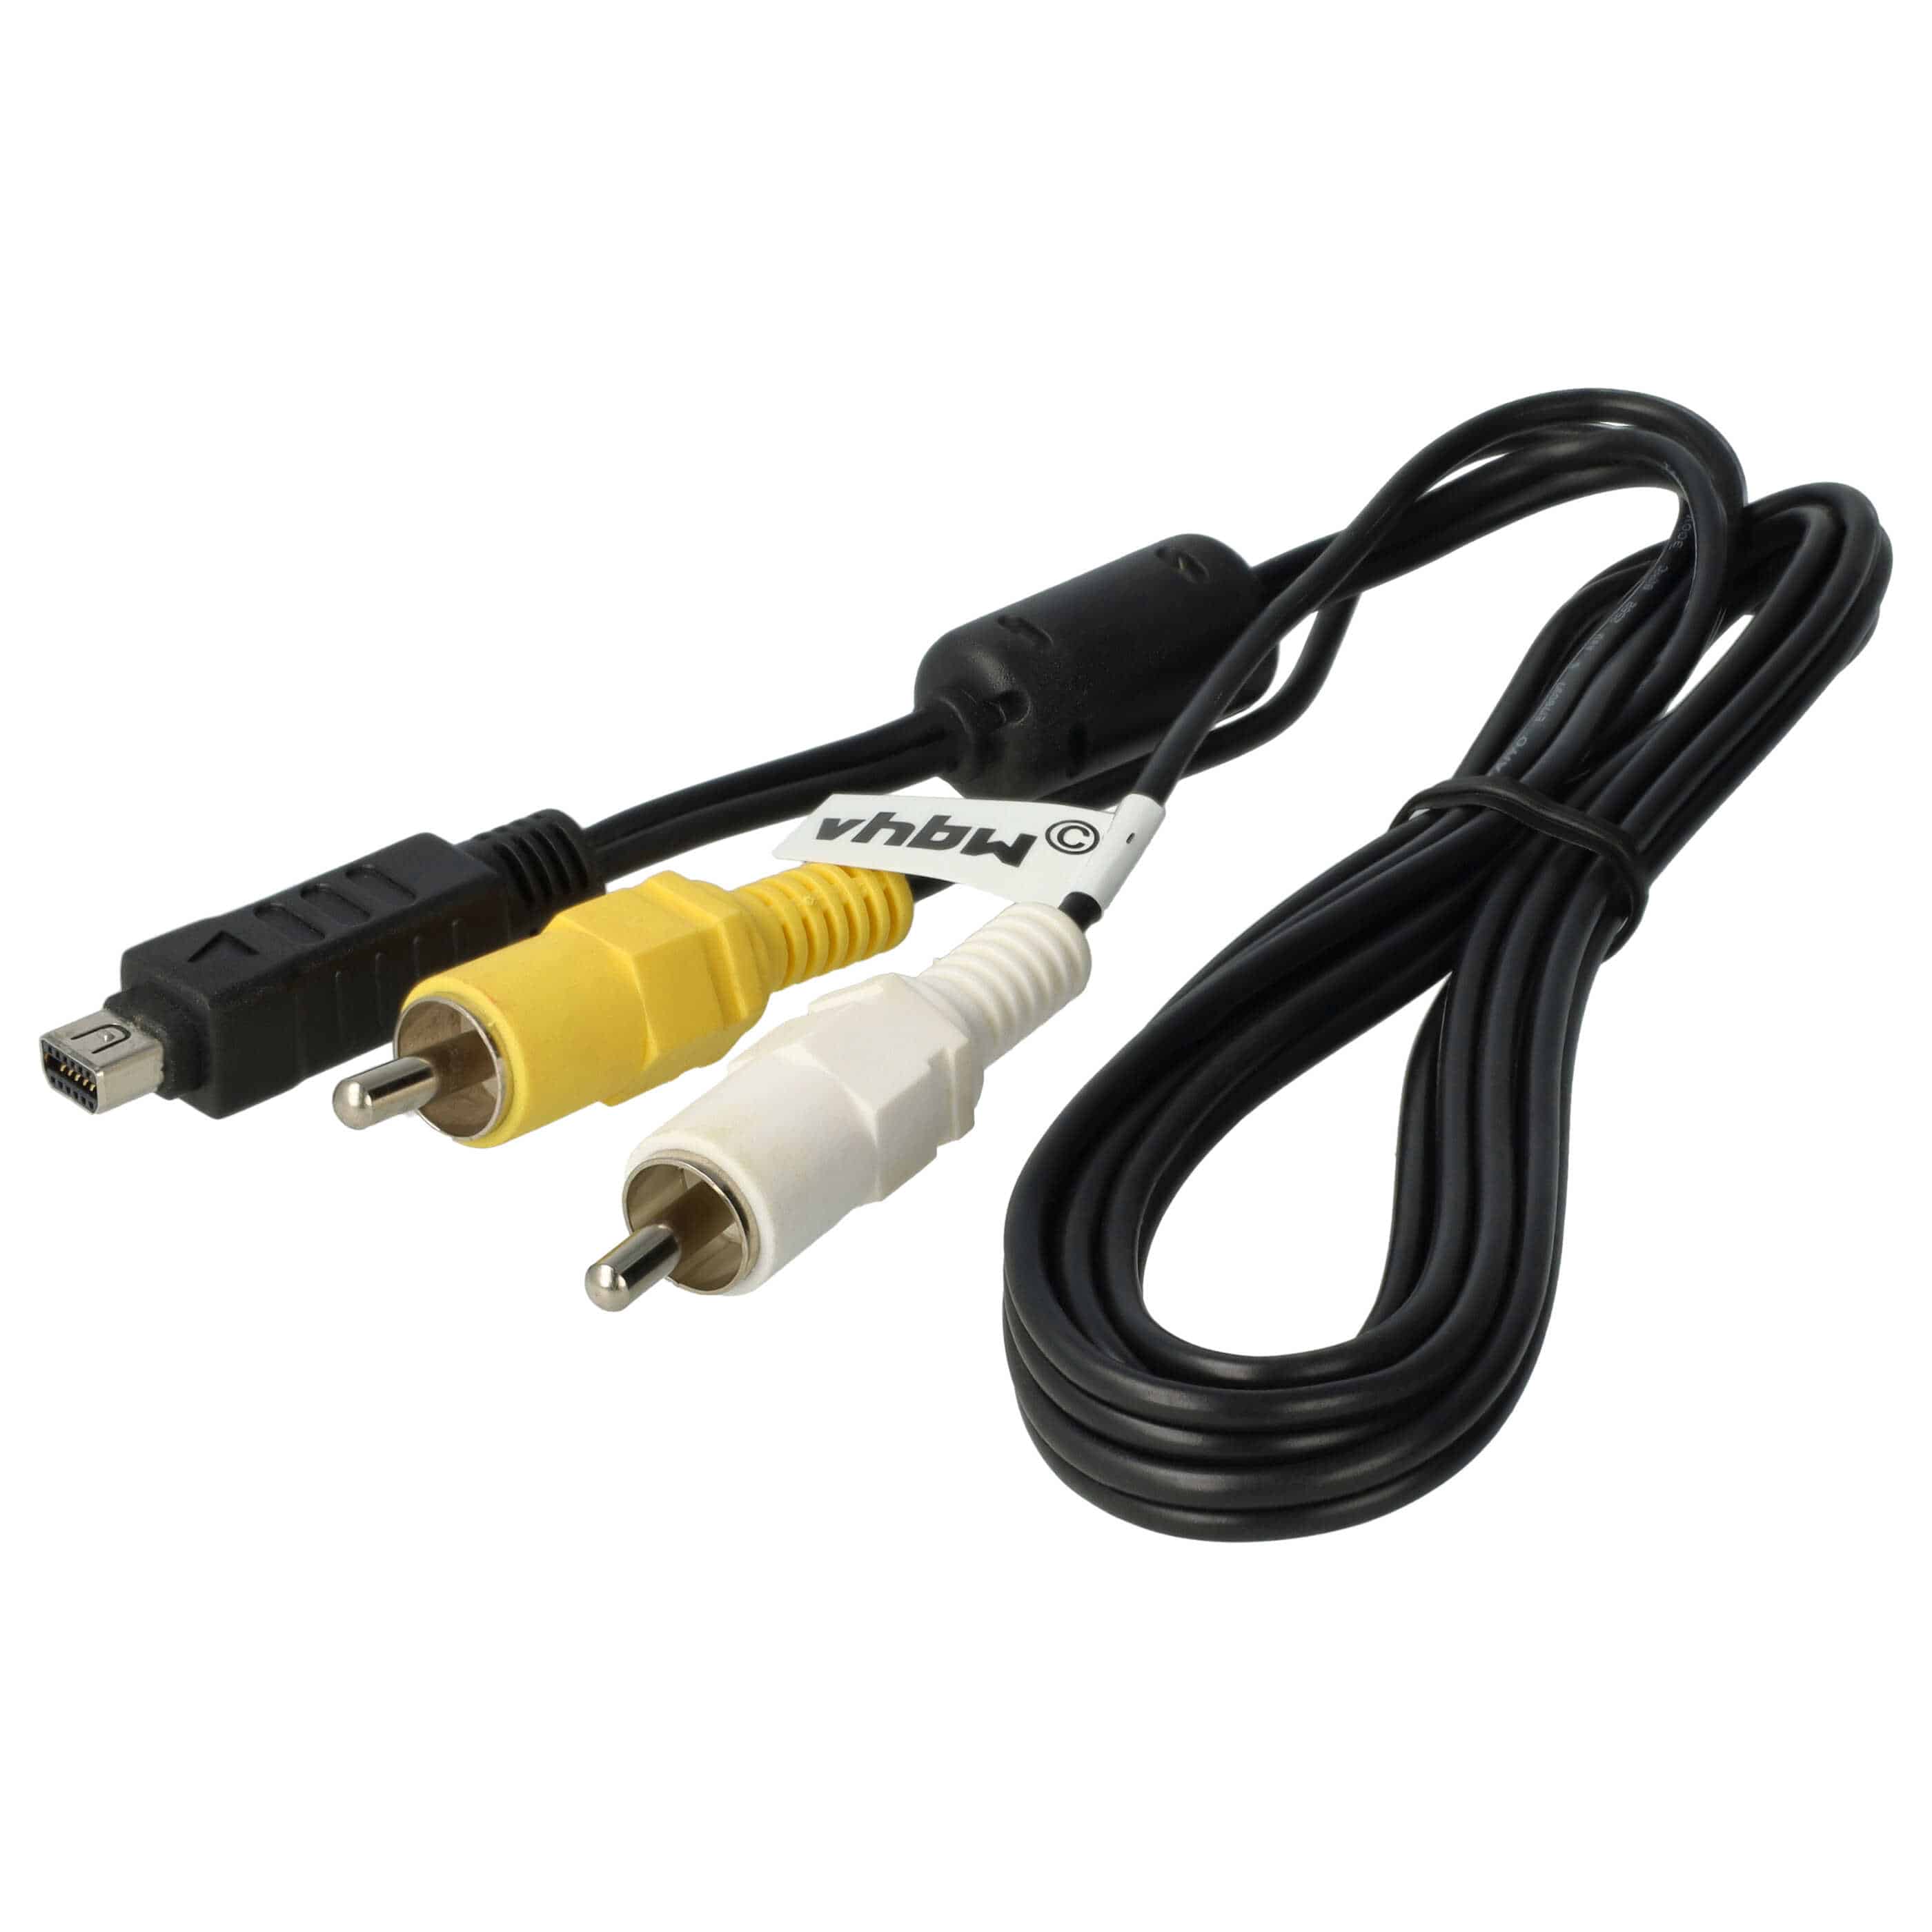 vhbw Audio Video Composite Kabel passend für Olympus C-170 Kamera, Digitalkamera - AV-Kabel